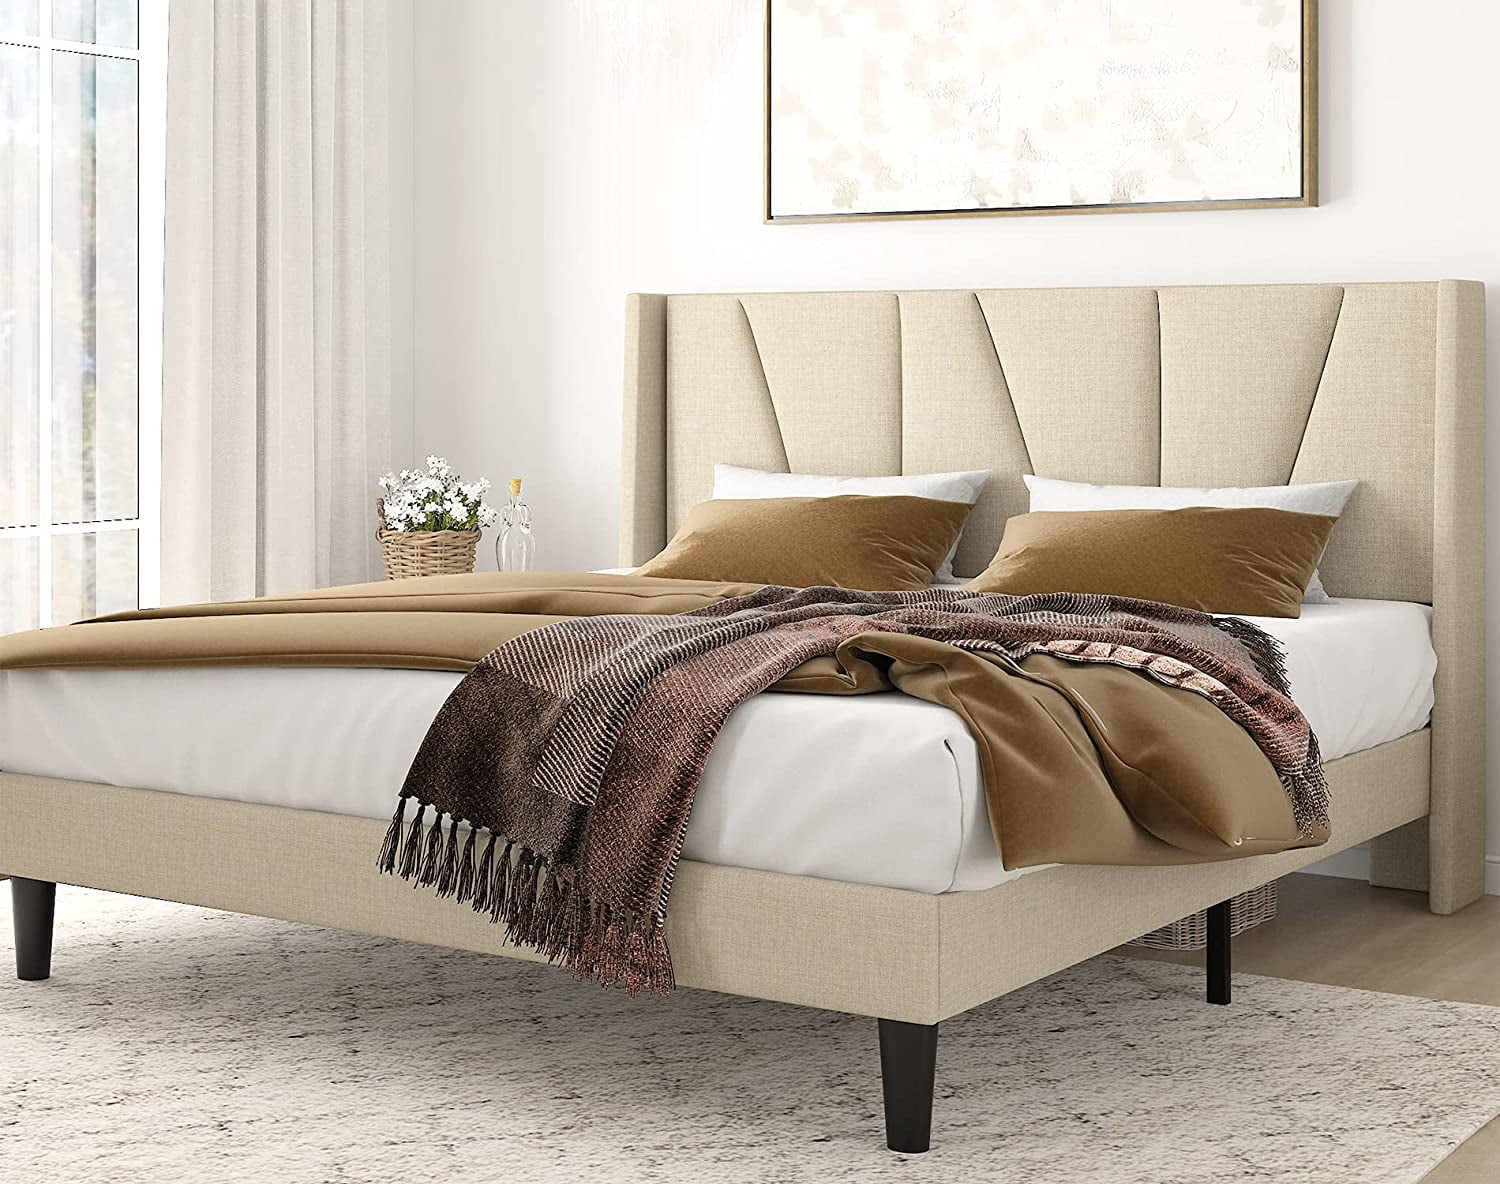 Amolife King Size Upholstered Platform, Bed Frame With Headboard King Size